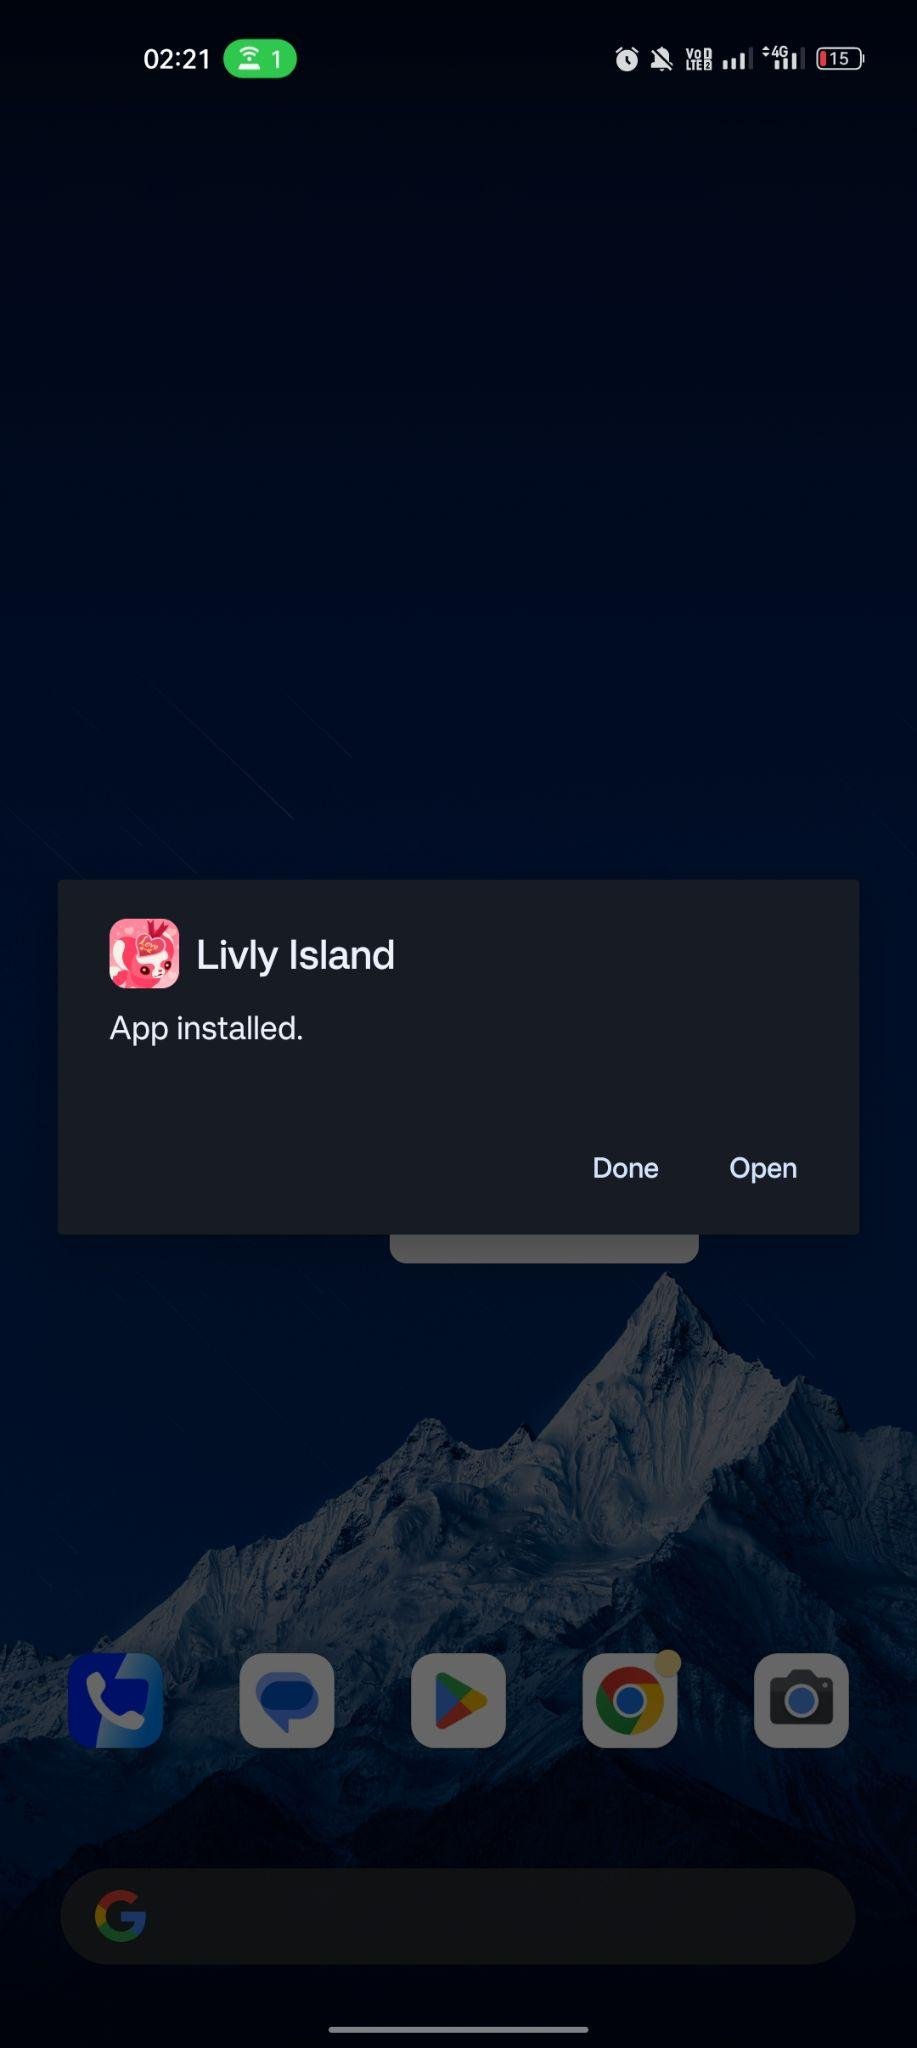 Livly Island apk installed